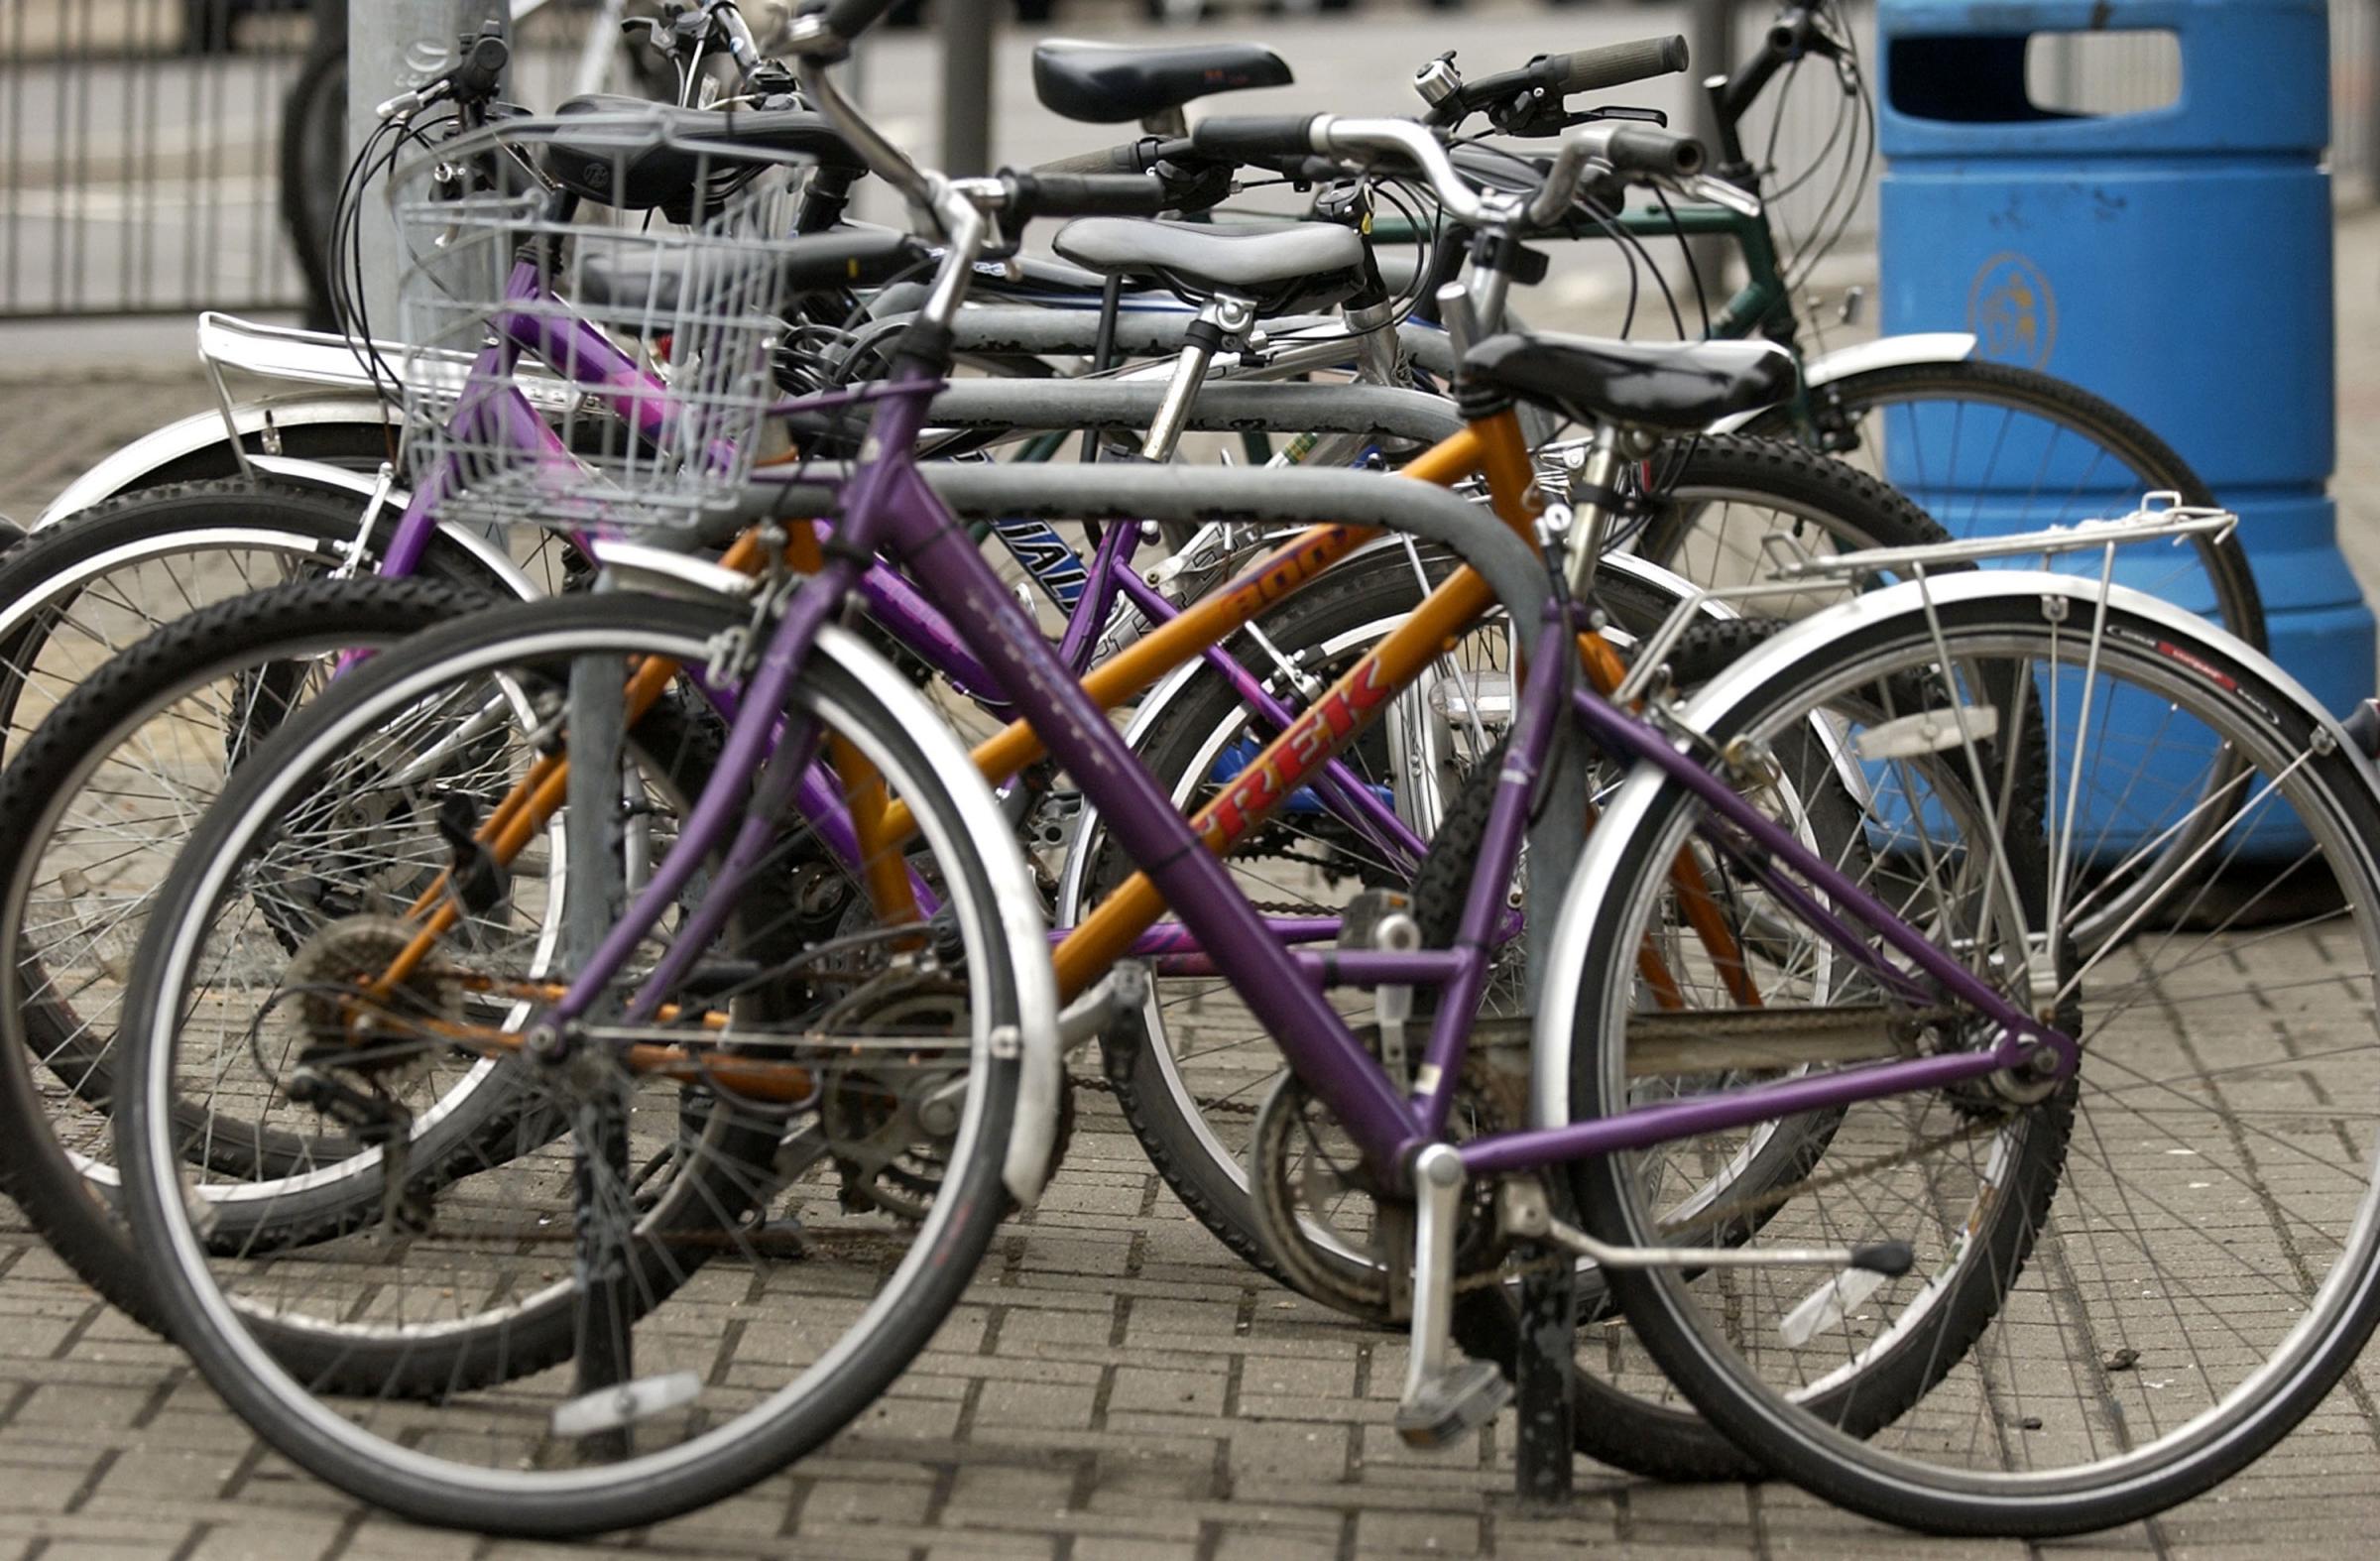 London Mayor Sadiq Khan to spend 'record amount' on London cycling initiatives